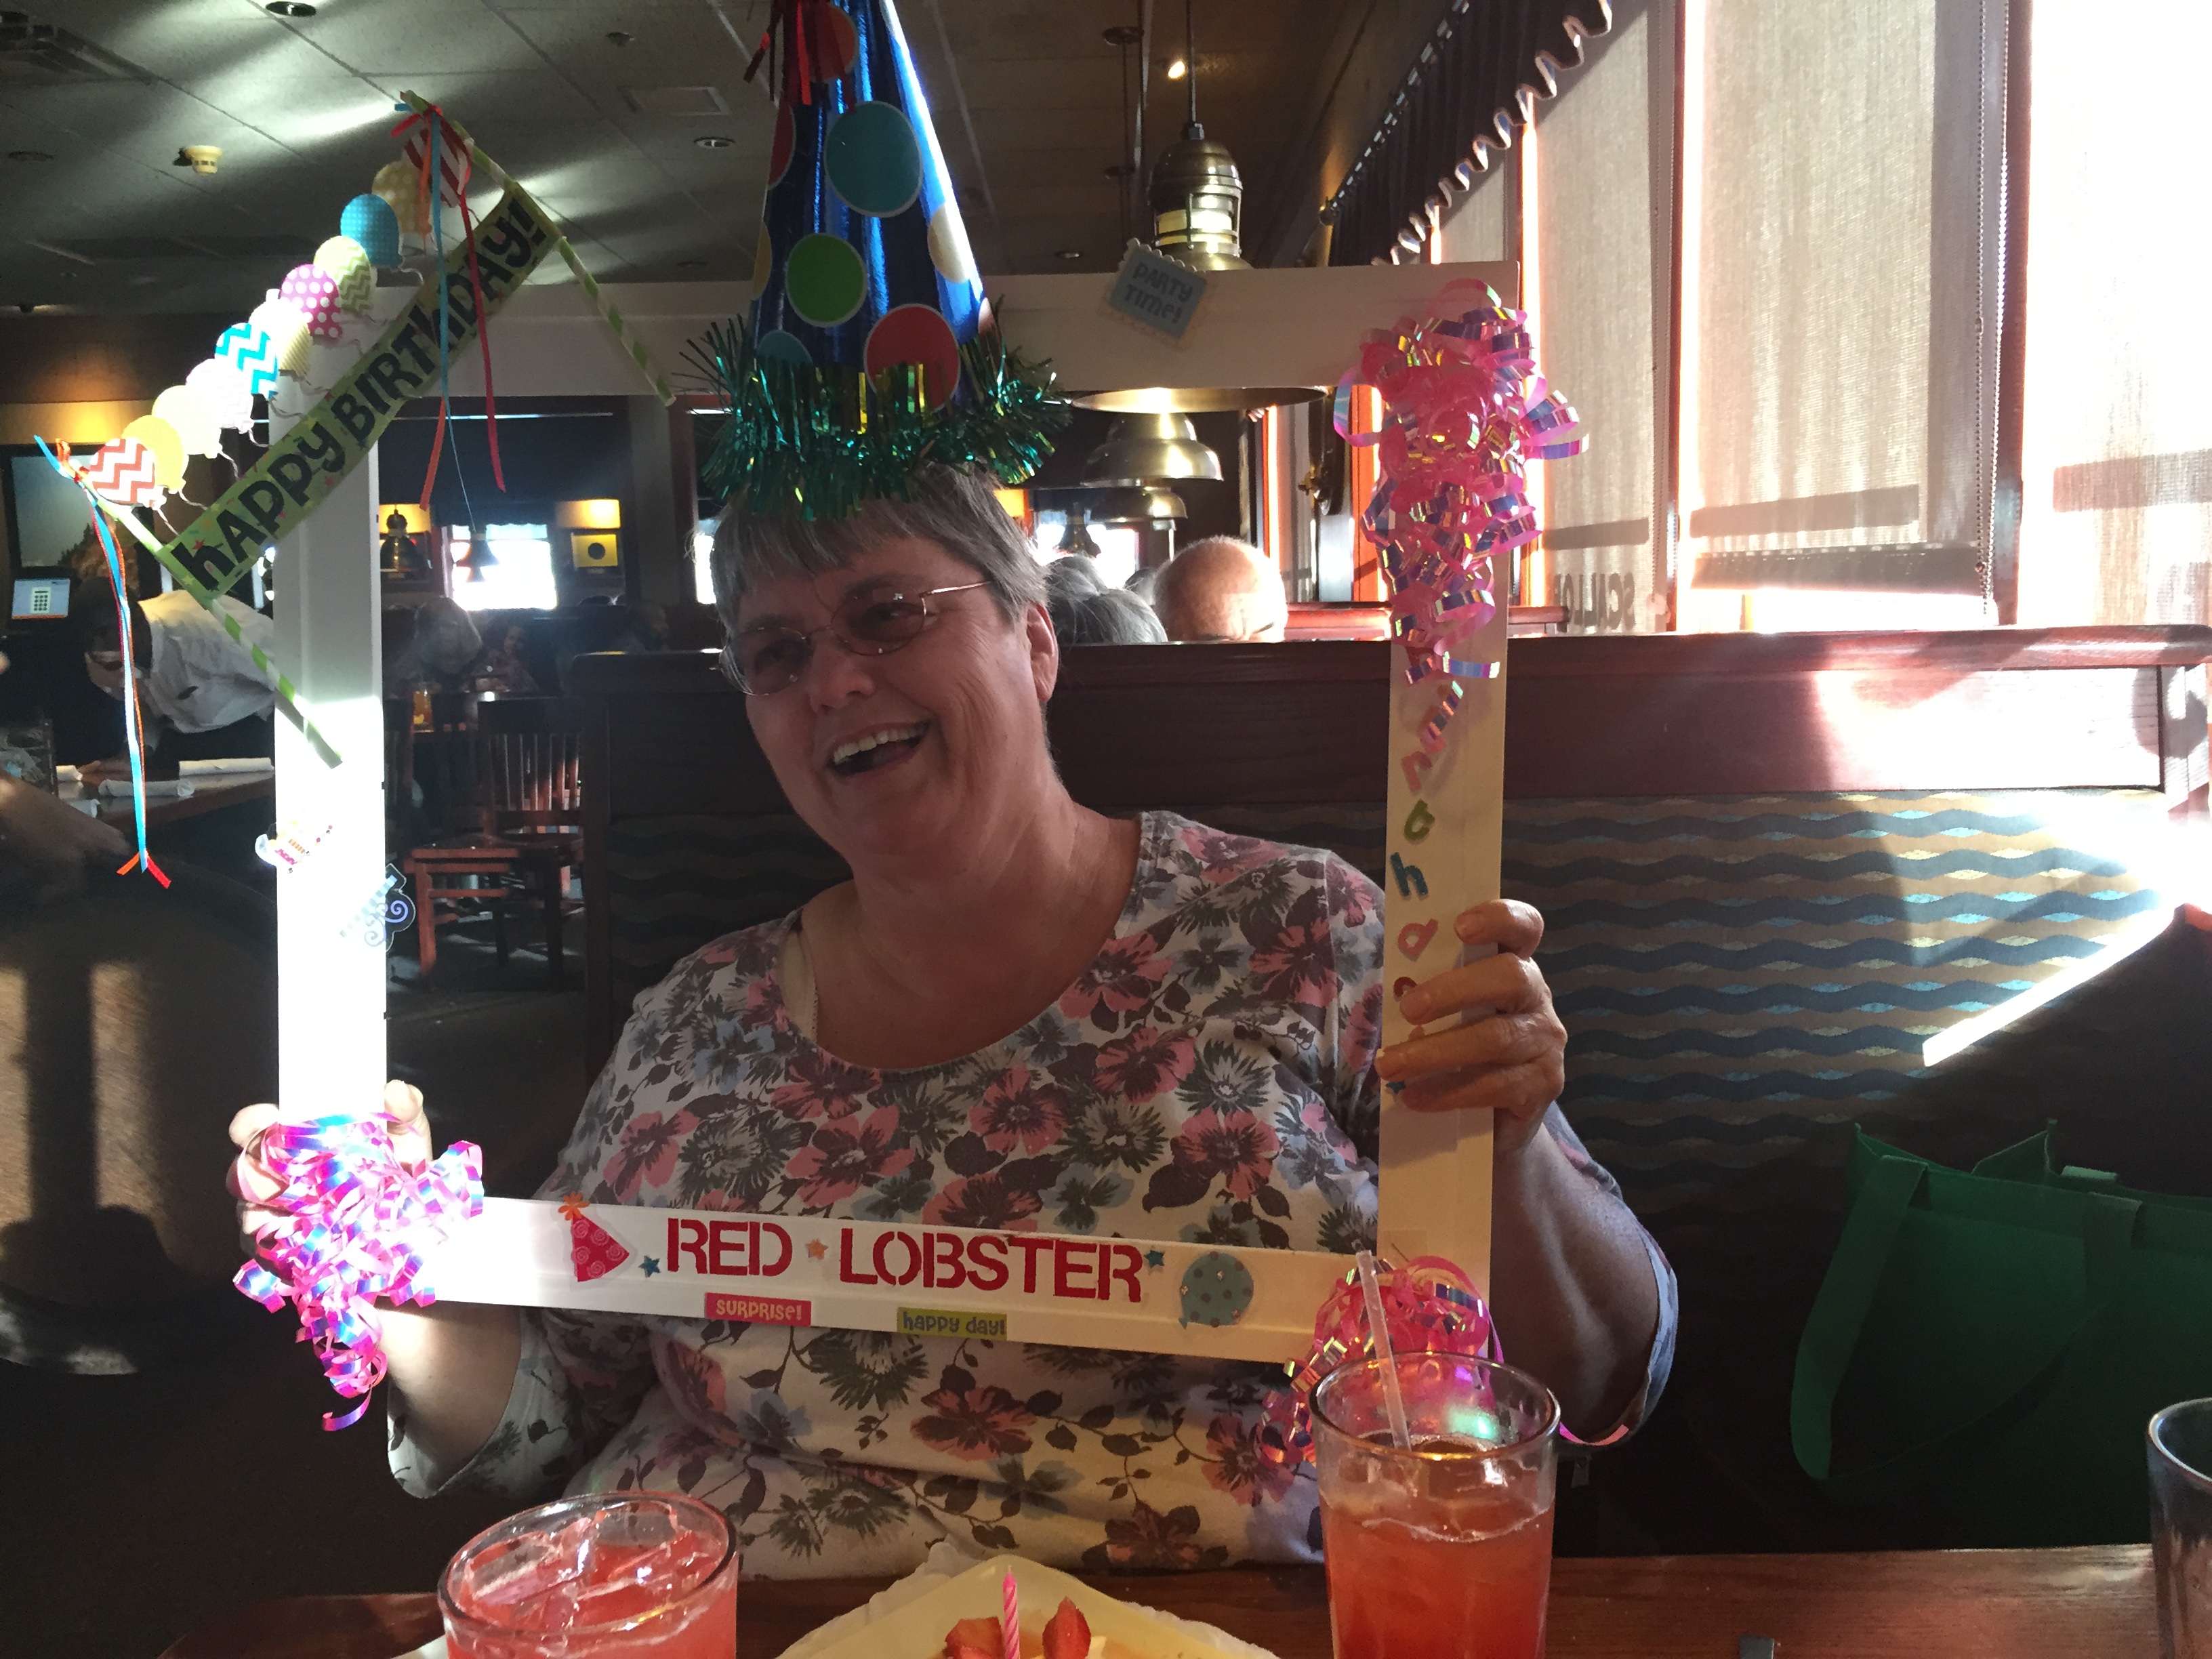 Celebrating Mom's birthday at Red Lobster